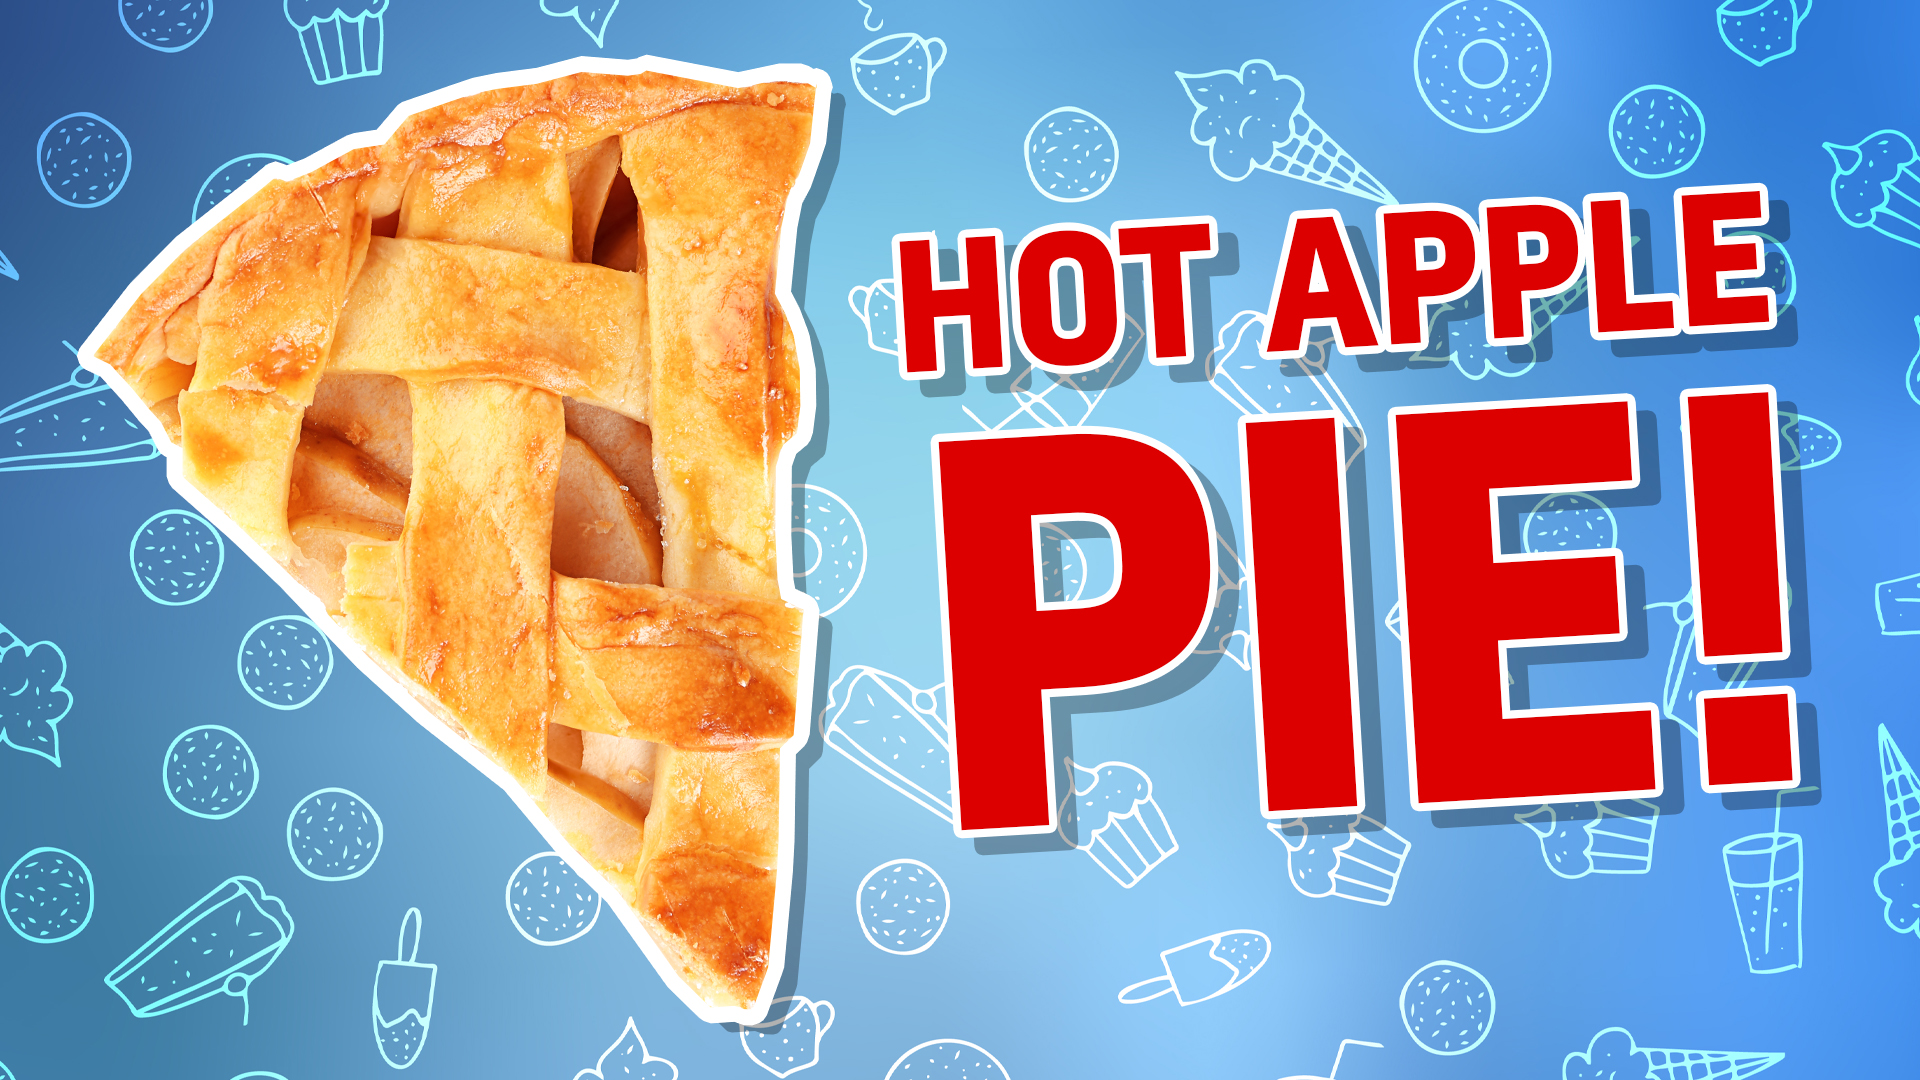 Hot apple pie